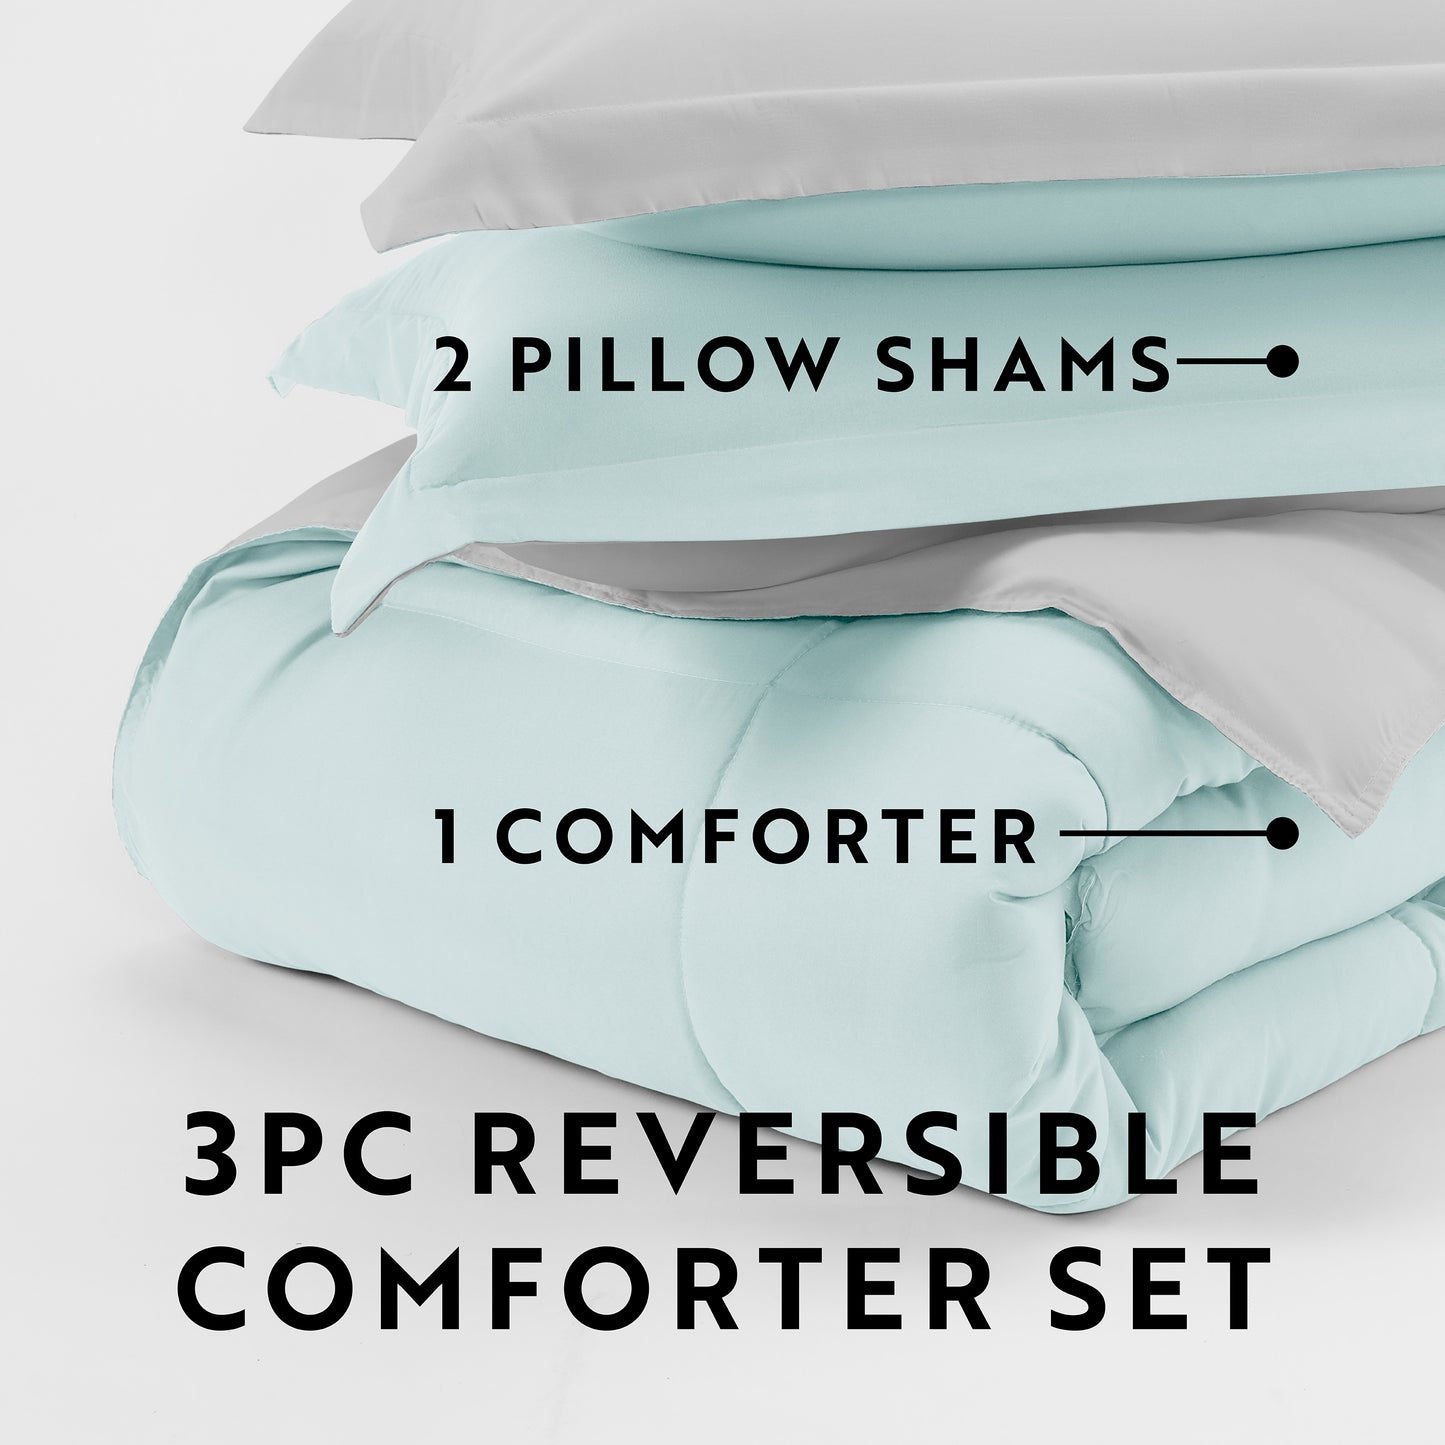 3pc Reversible Comforter set